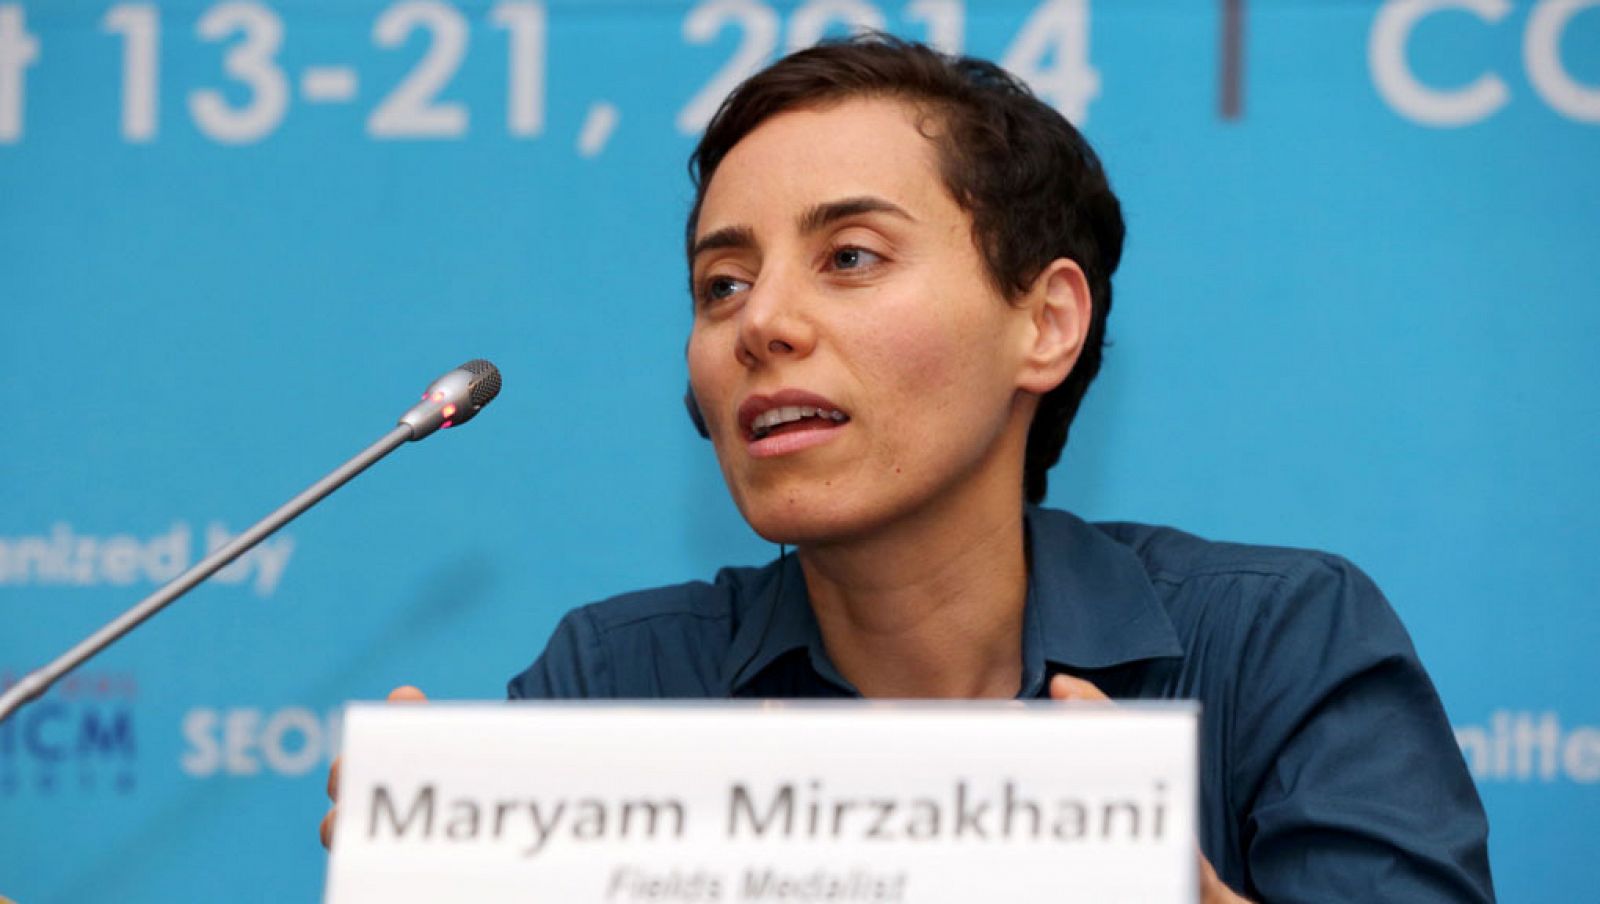 Maryam Mirzakhani durante el Congreso Internacional de Matemáticas en Seúl